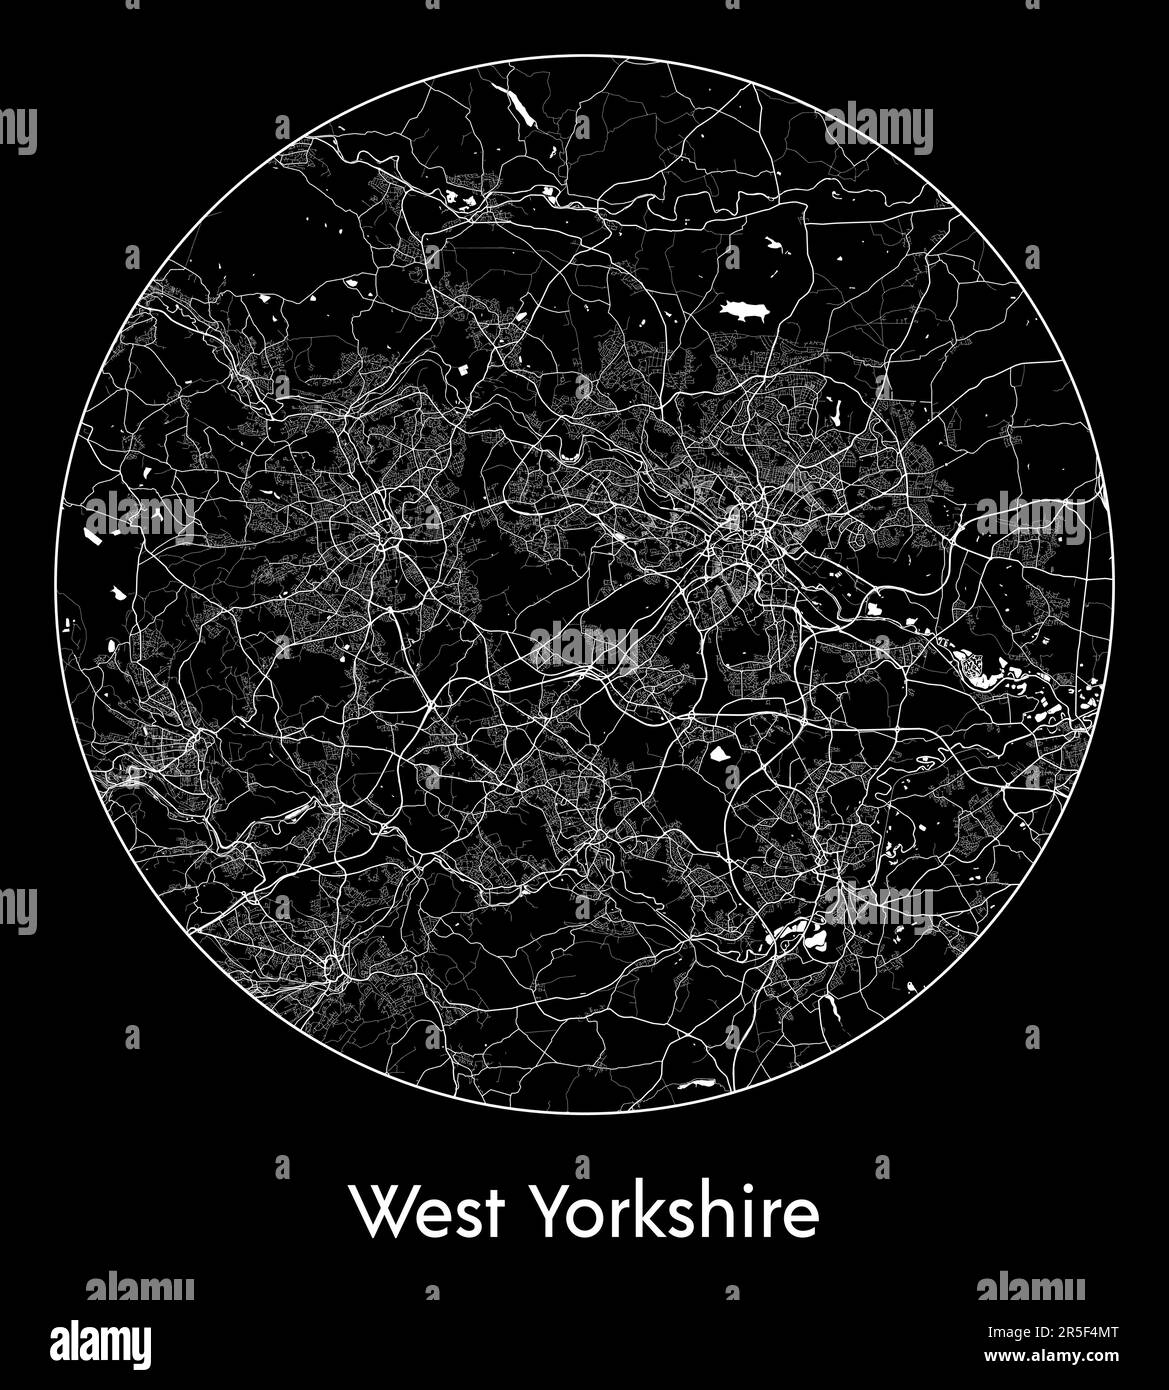 City Map West Yorkshire United Kingdom Europe vector illustration Stock ...